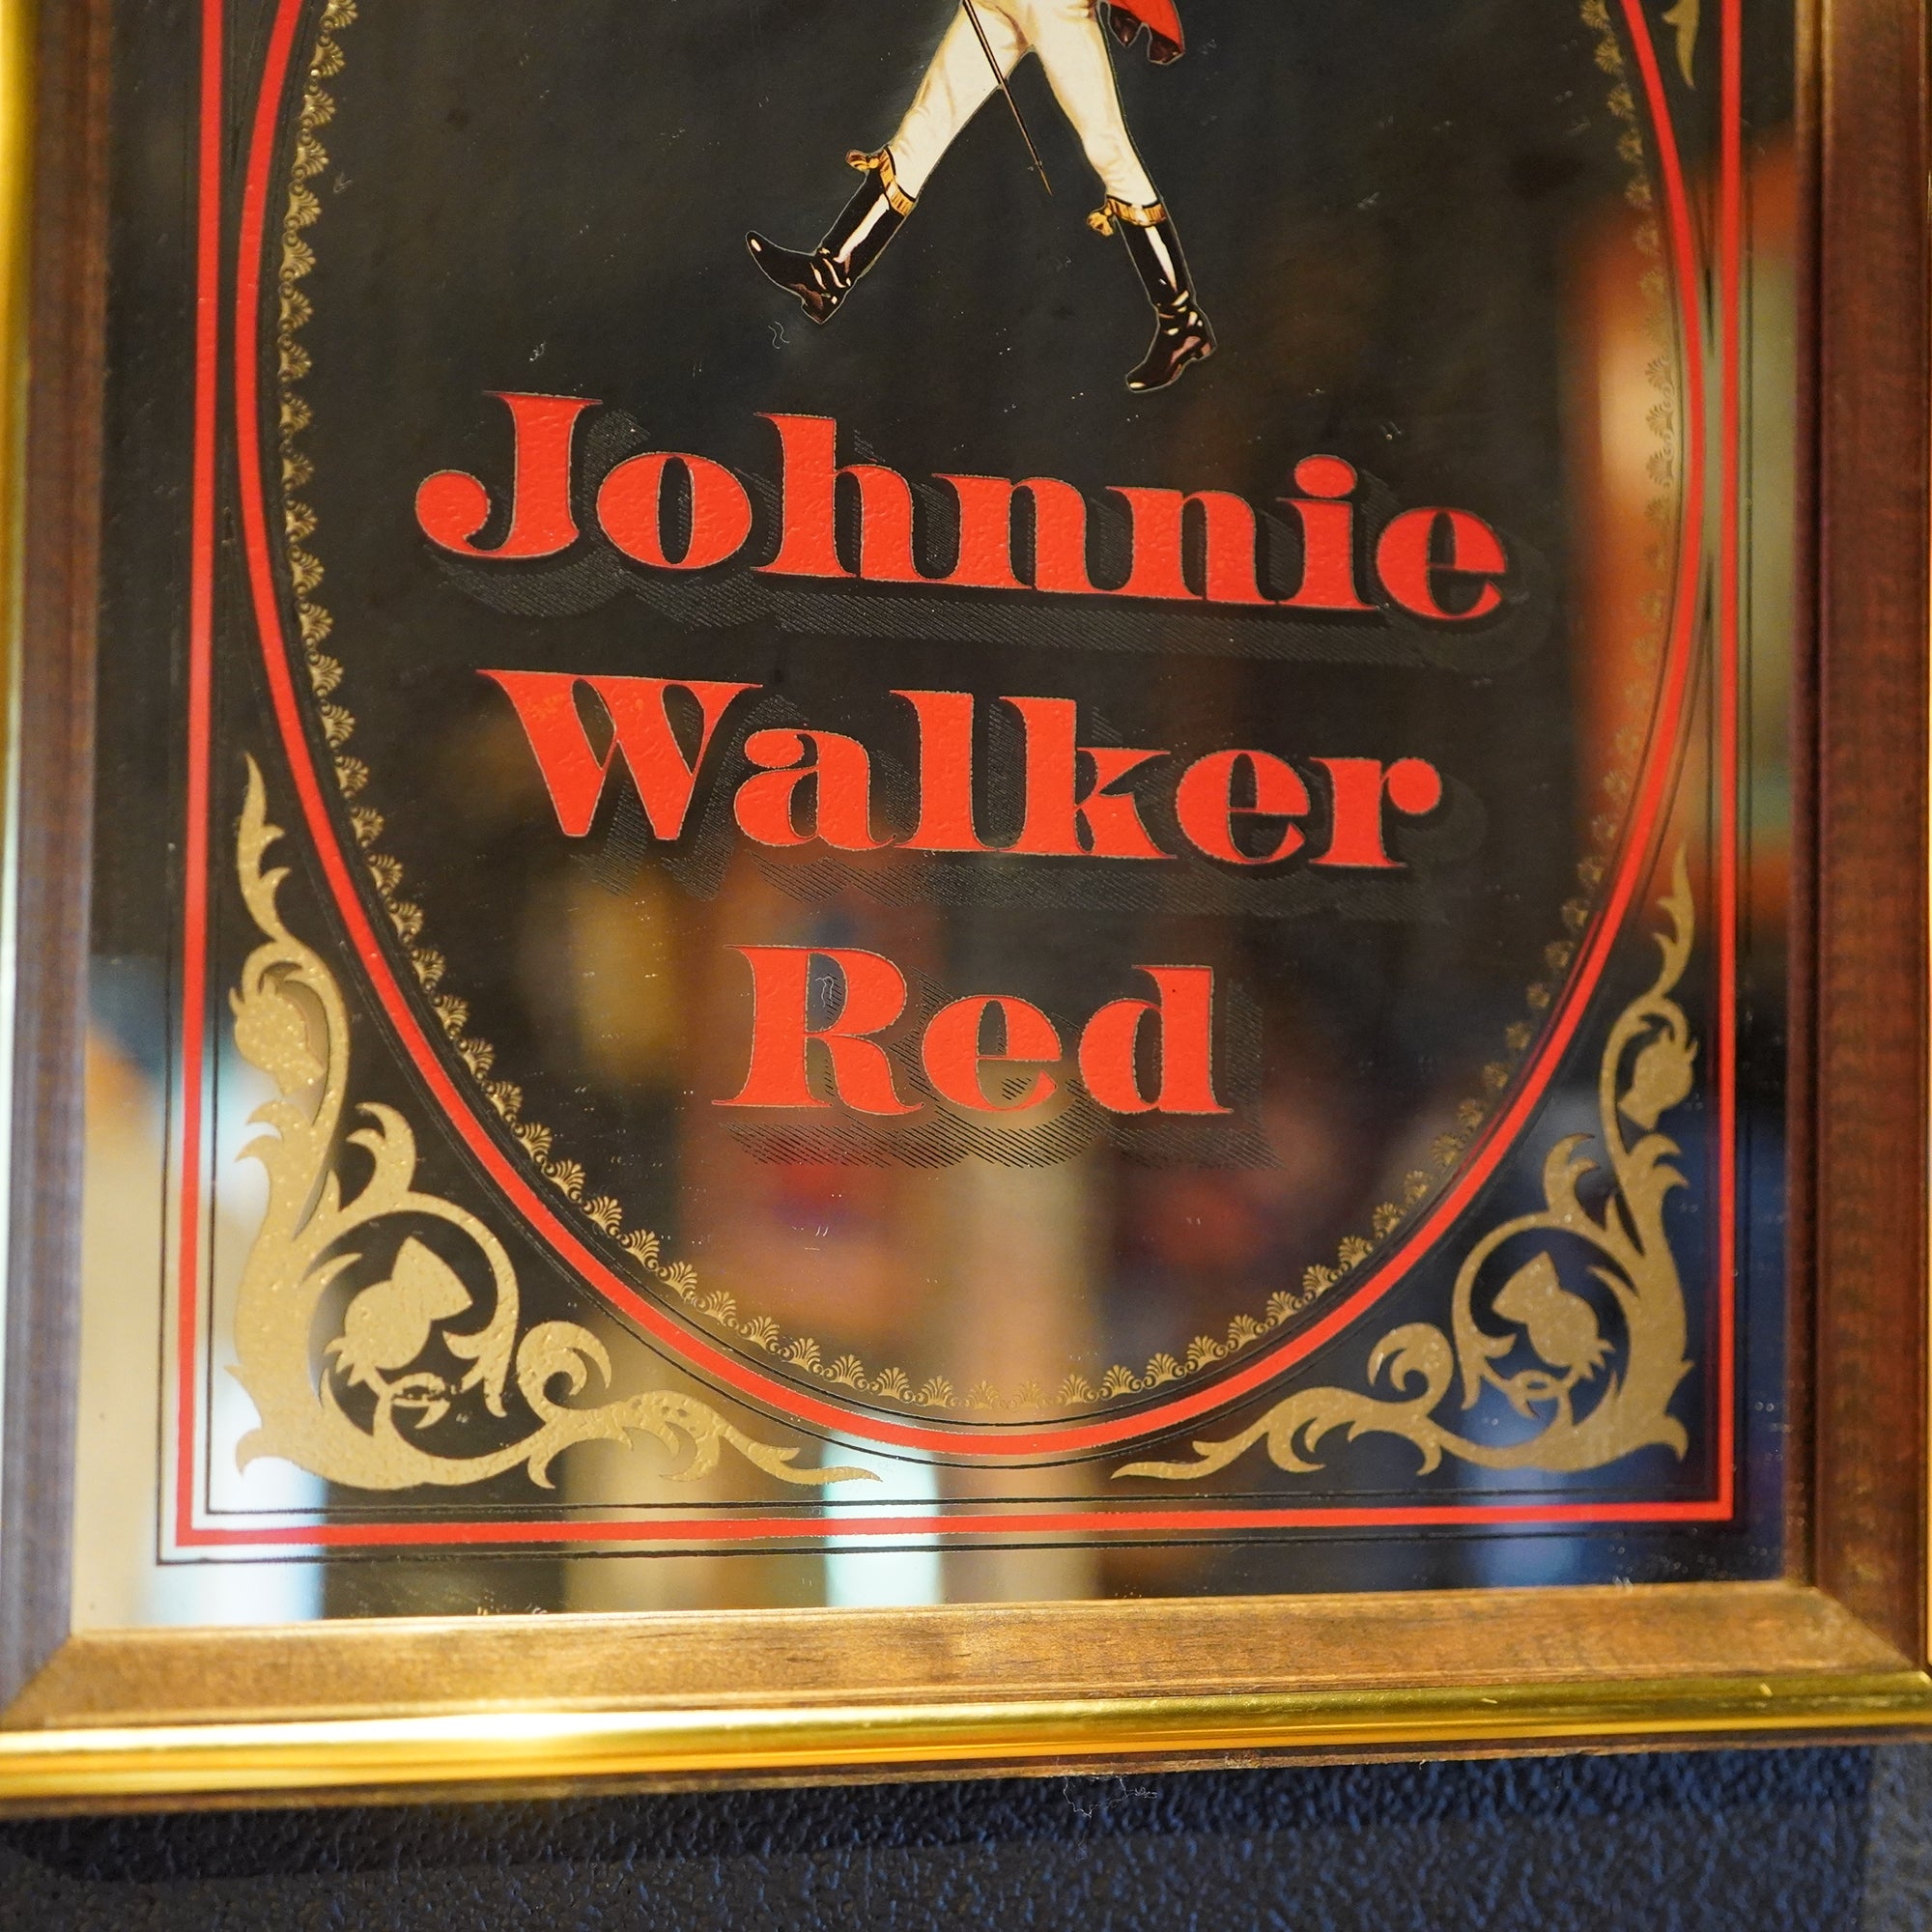 Jonnie walker red パブミラー